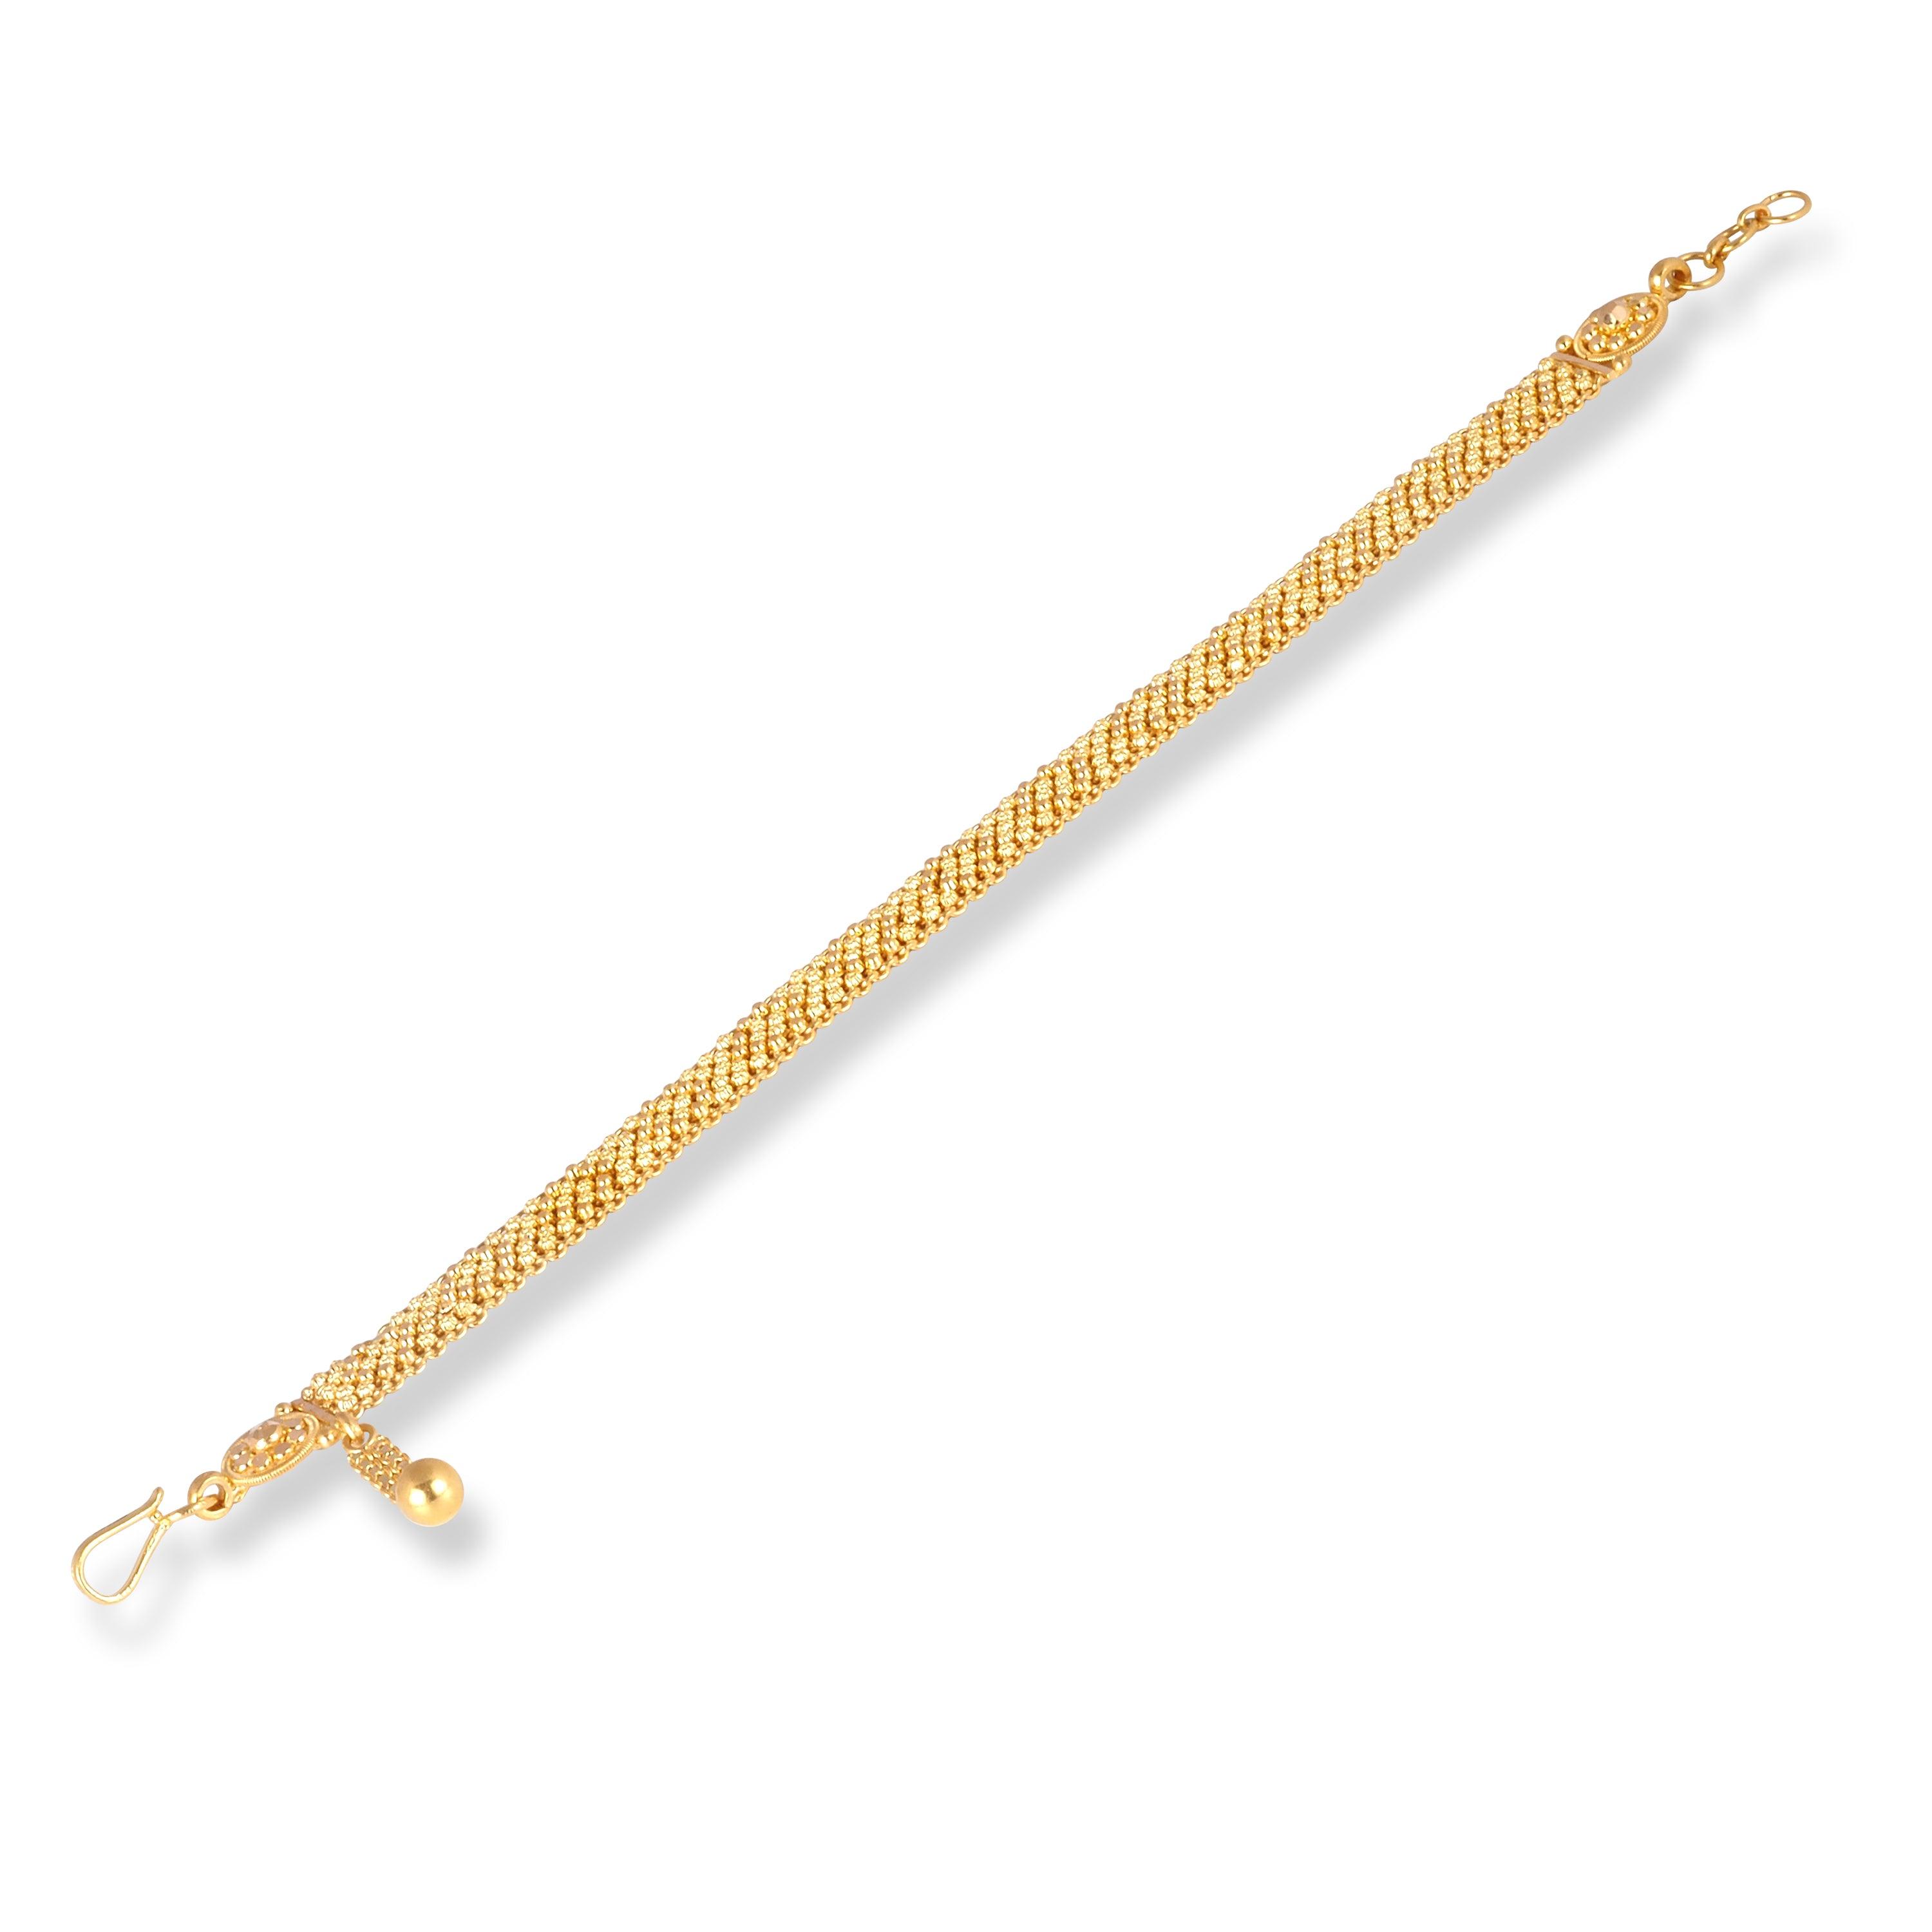 22ct Gold Ladies Bracelet in Filigree Work Design with U-Hook Clasp LBR-7148 - Minar Jewellers